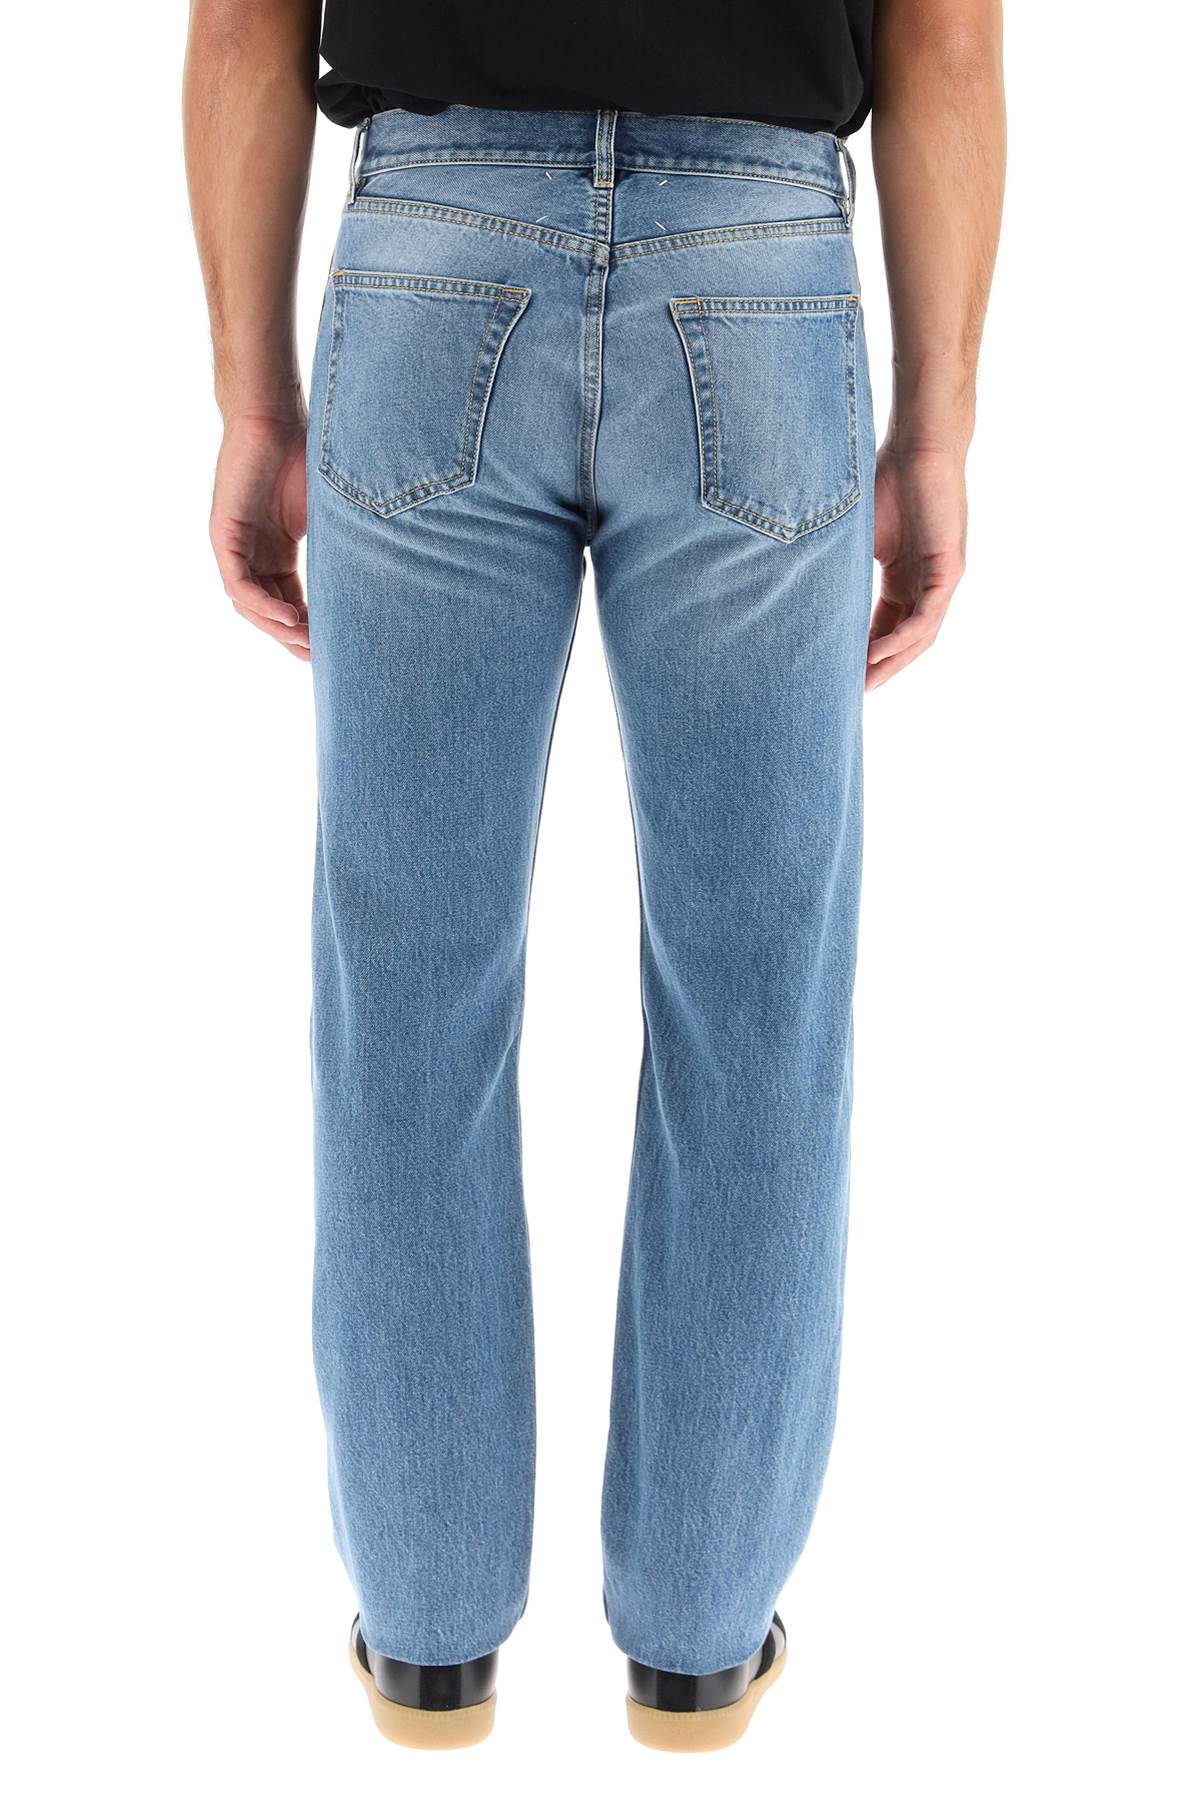 Maison margiela five-pocket straight jeans-2